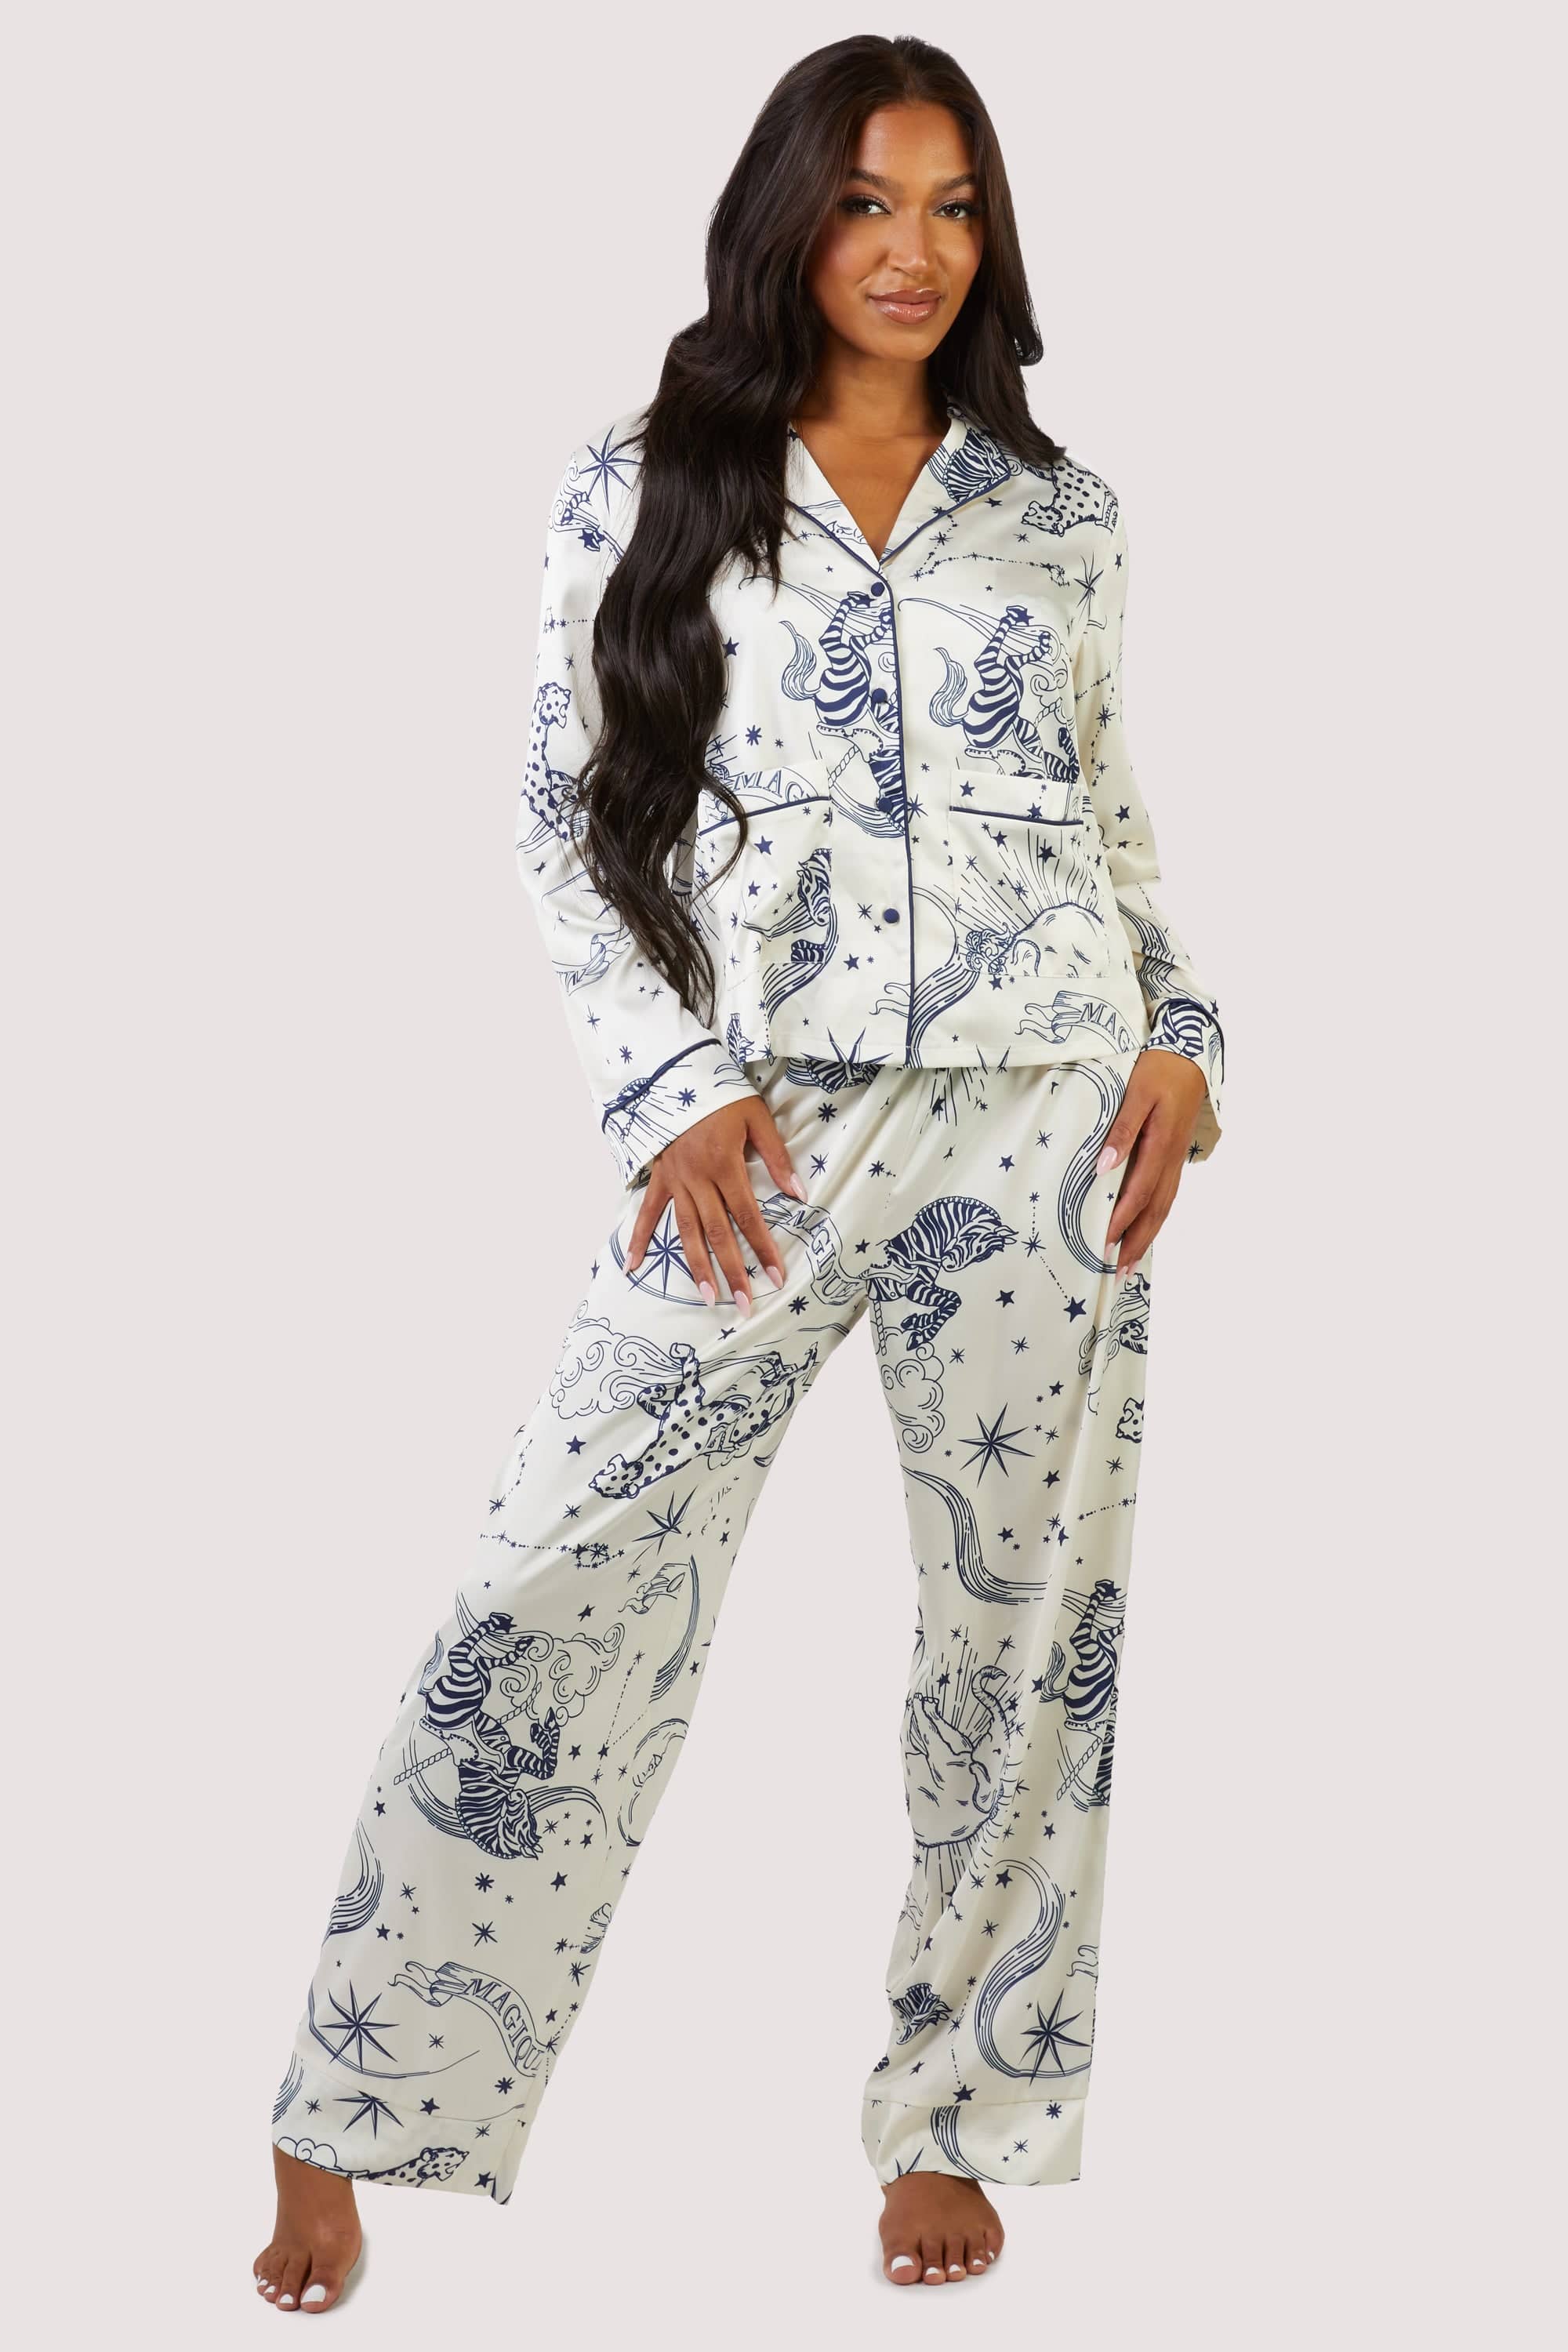 Celestial Long Sleeved Pyjama Set UK 16